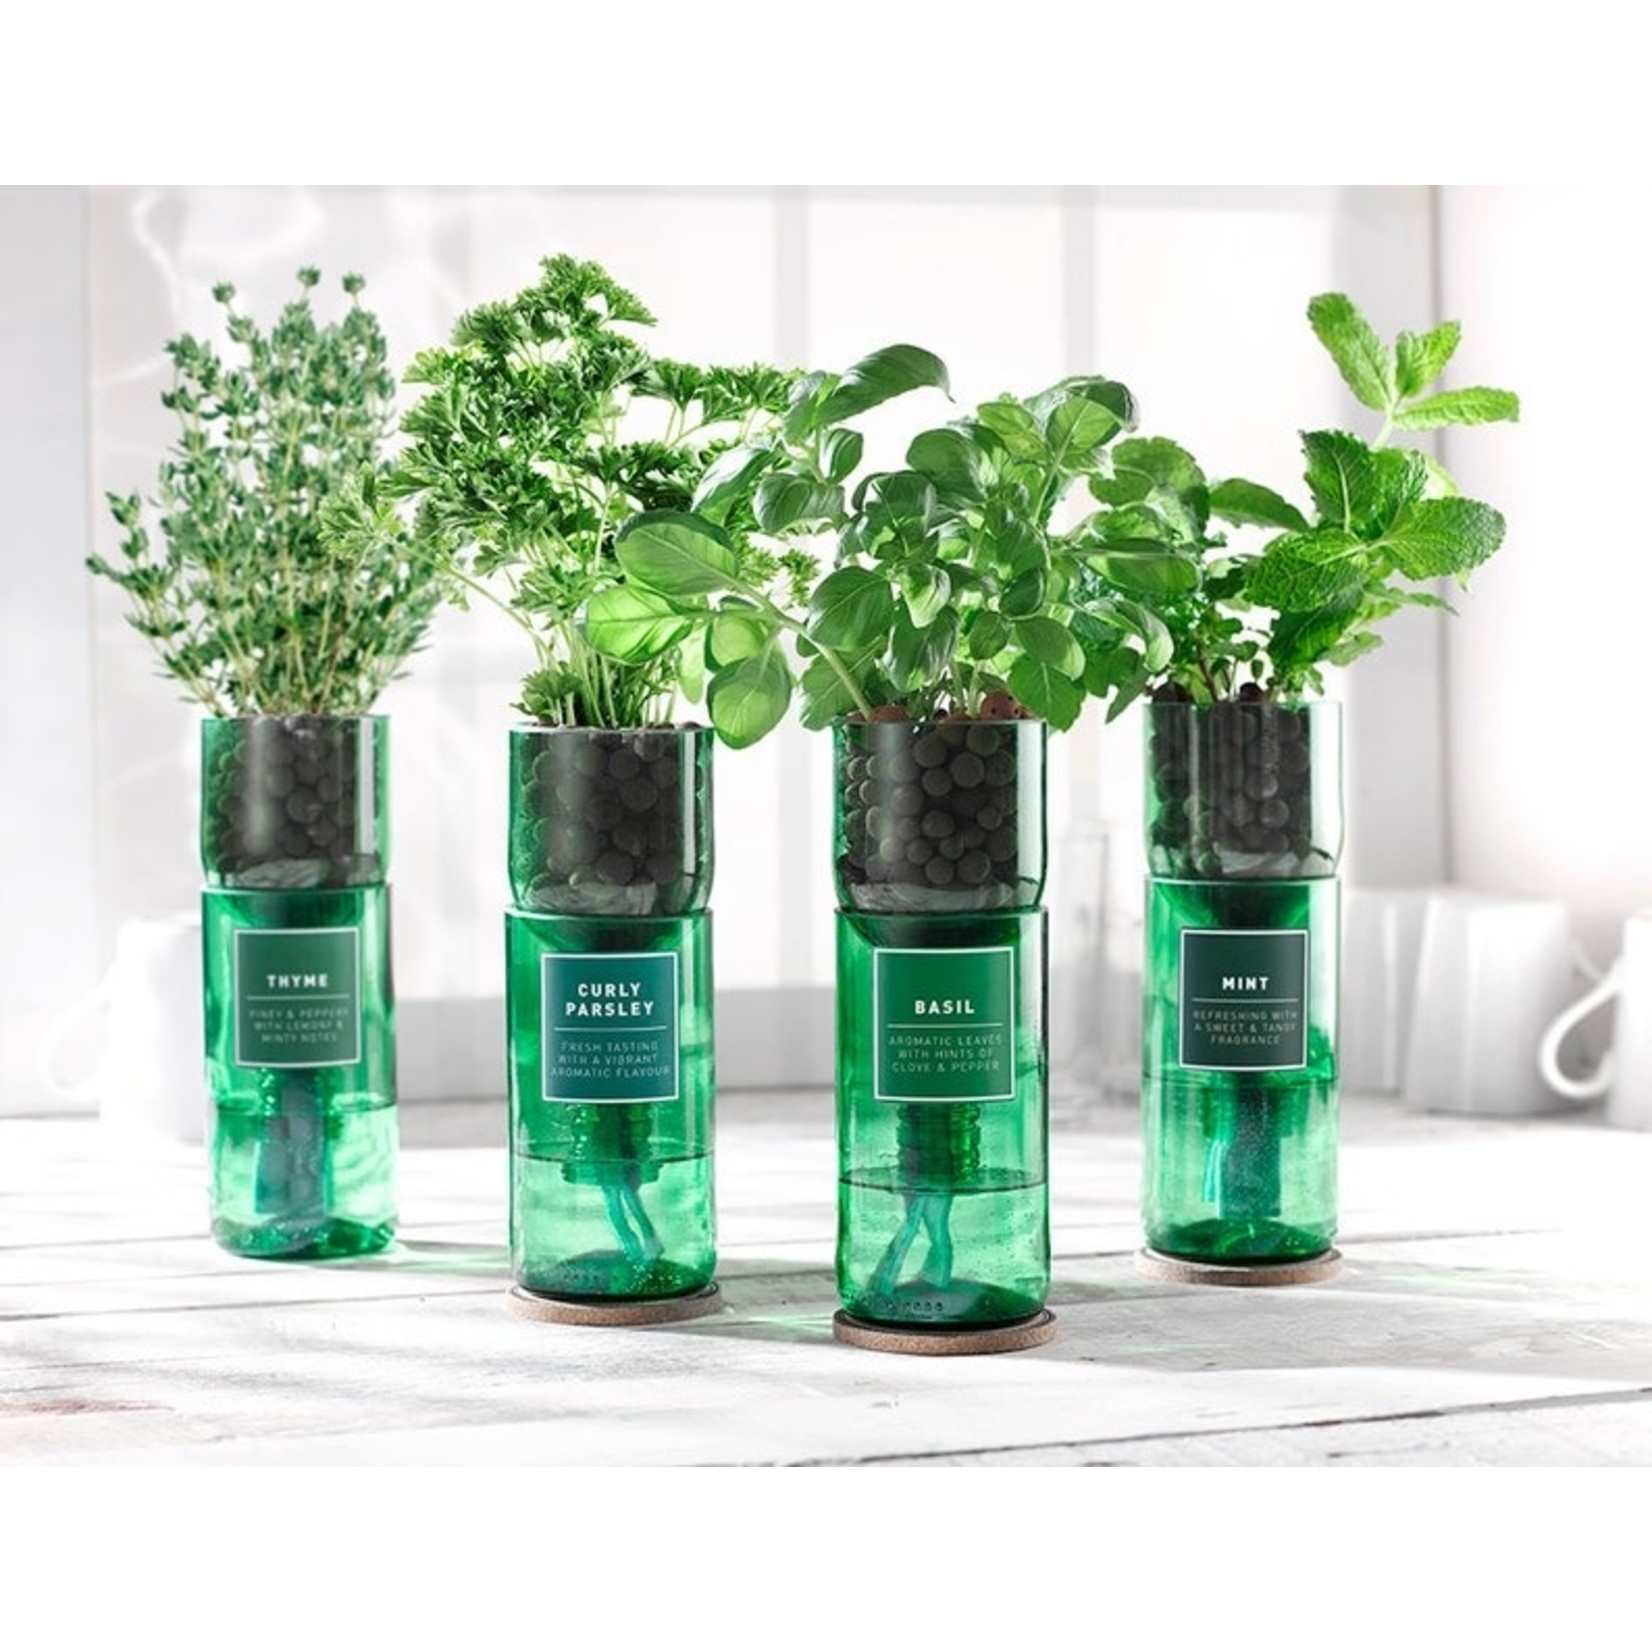 Hydro-herb Mint Hydro-herb Kit